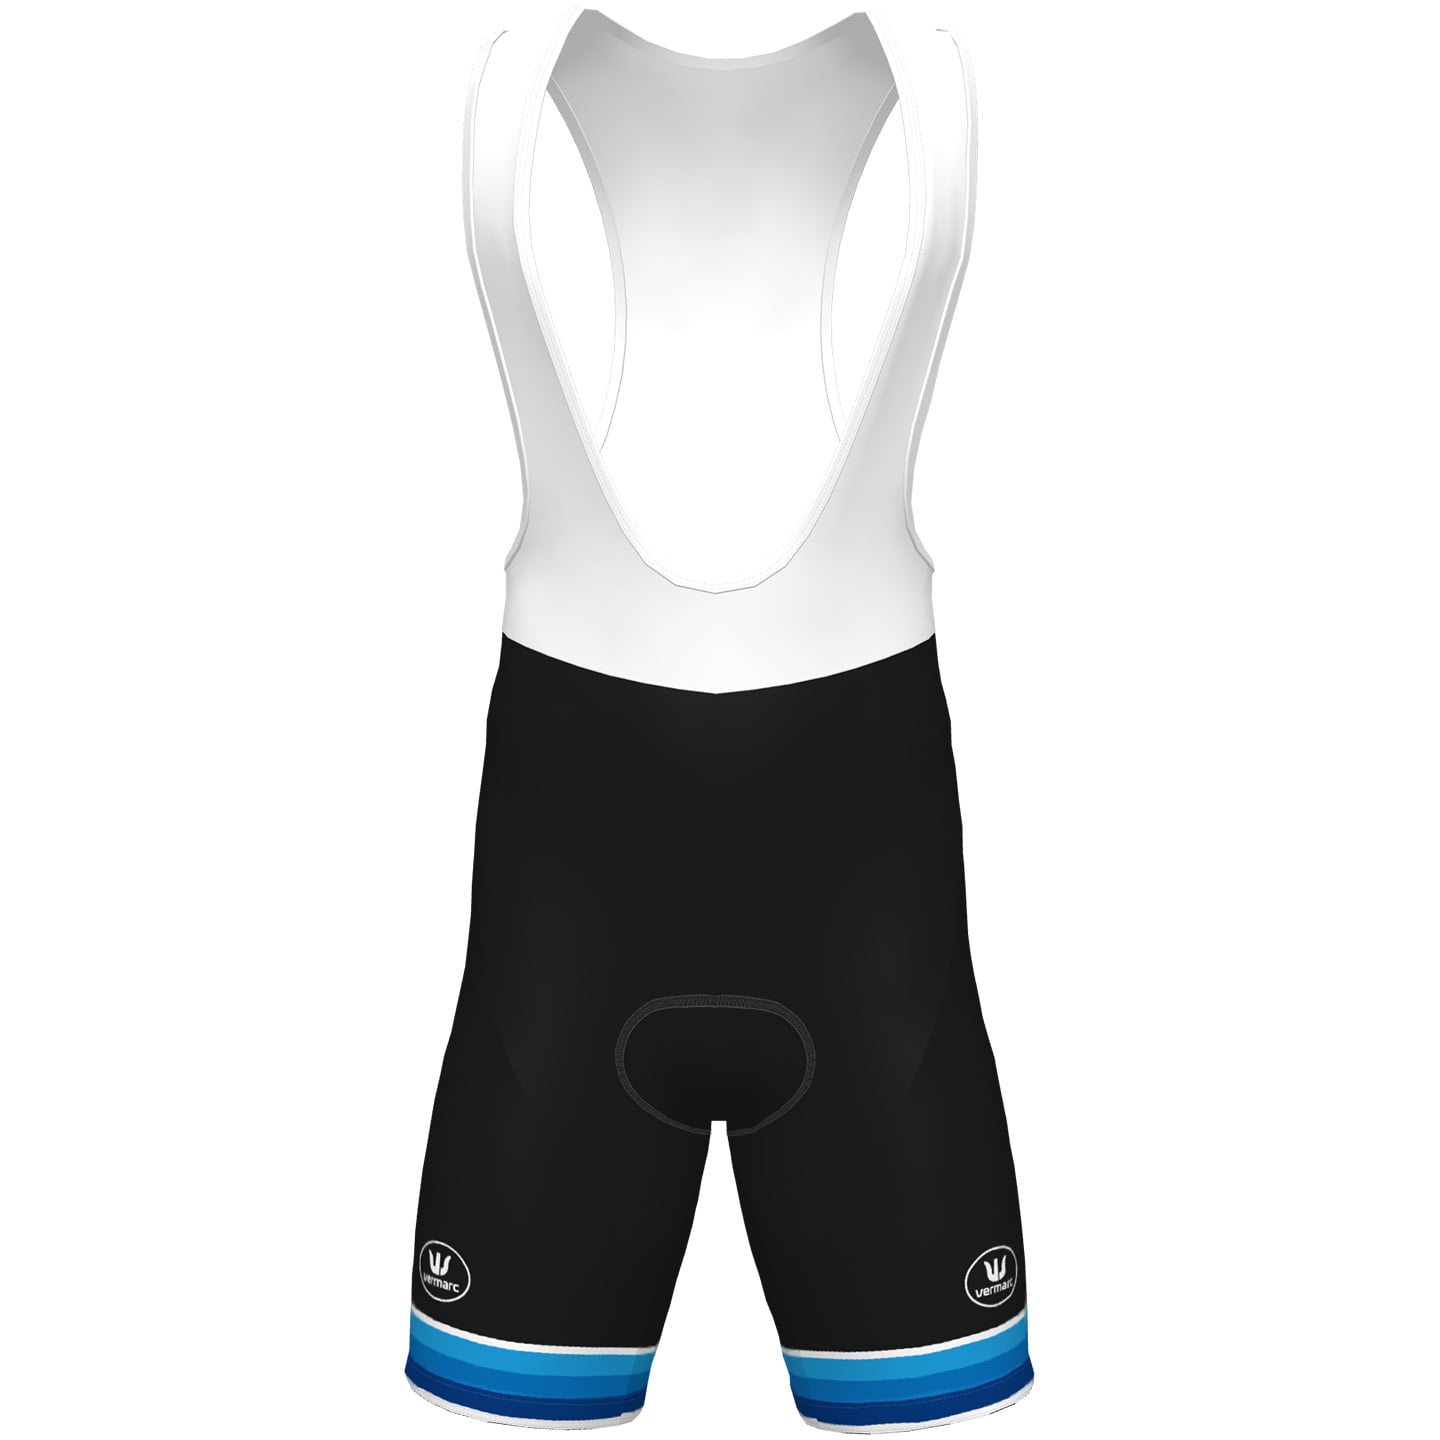 TREK BALOISE LION Bib Shorts European Champion 2022, for men, size S, Cycle shorts, Cycling clothing